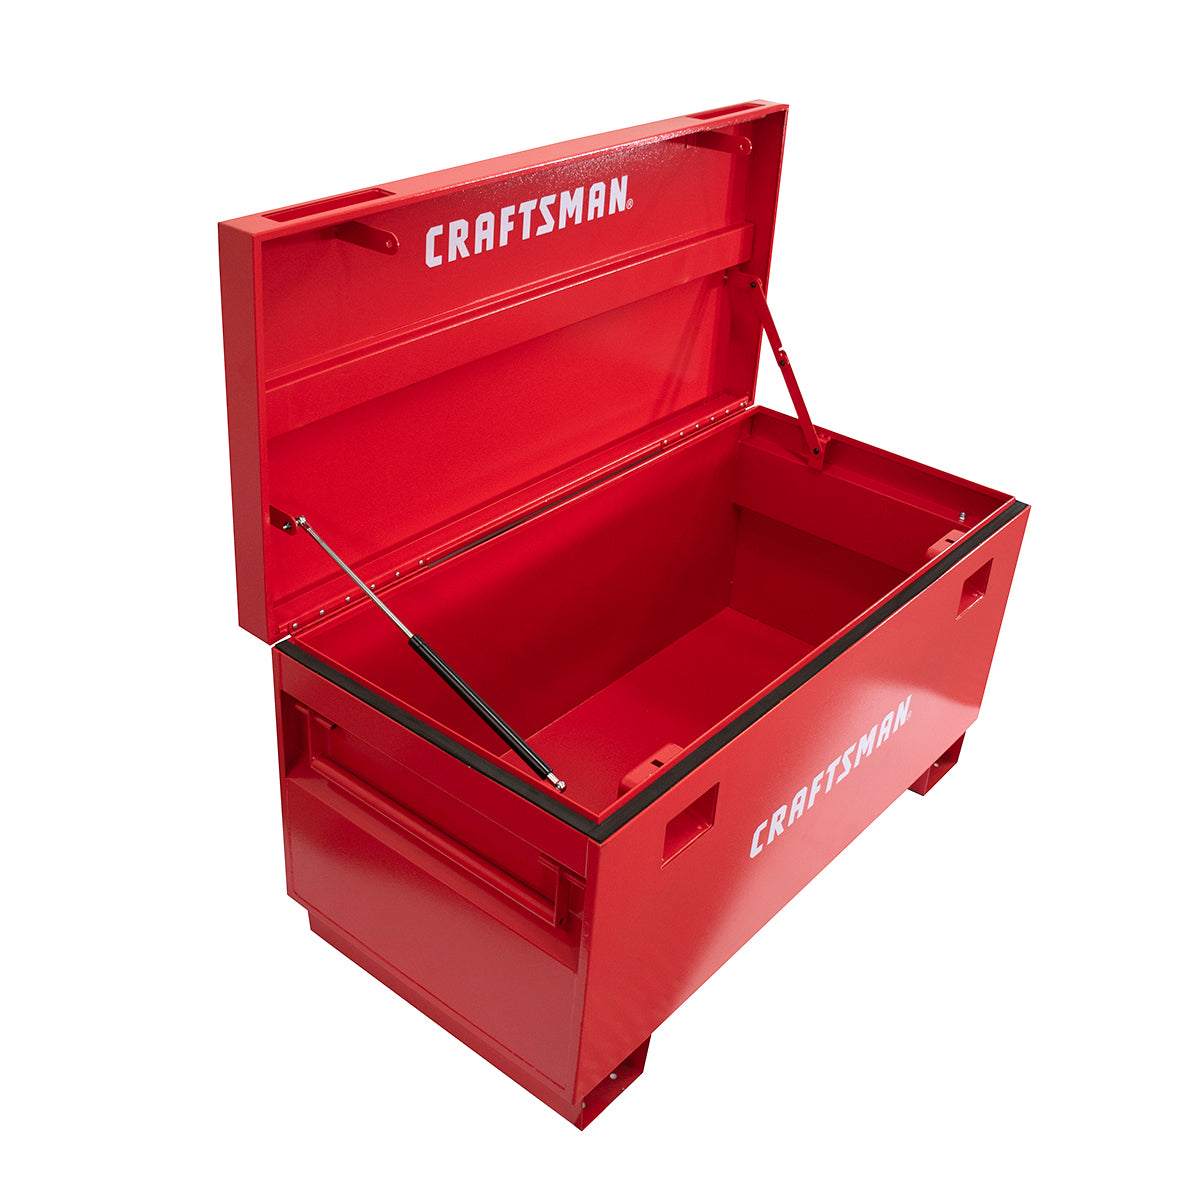 48 Craftsman Jobsite Box in Red